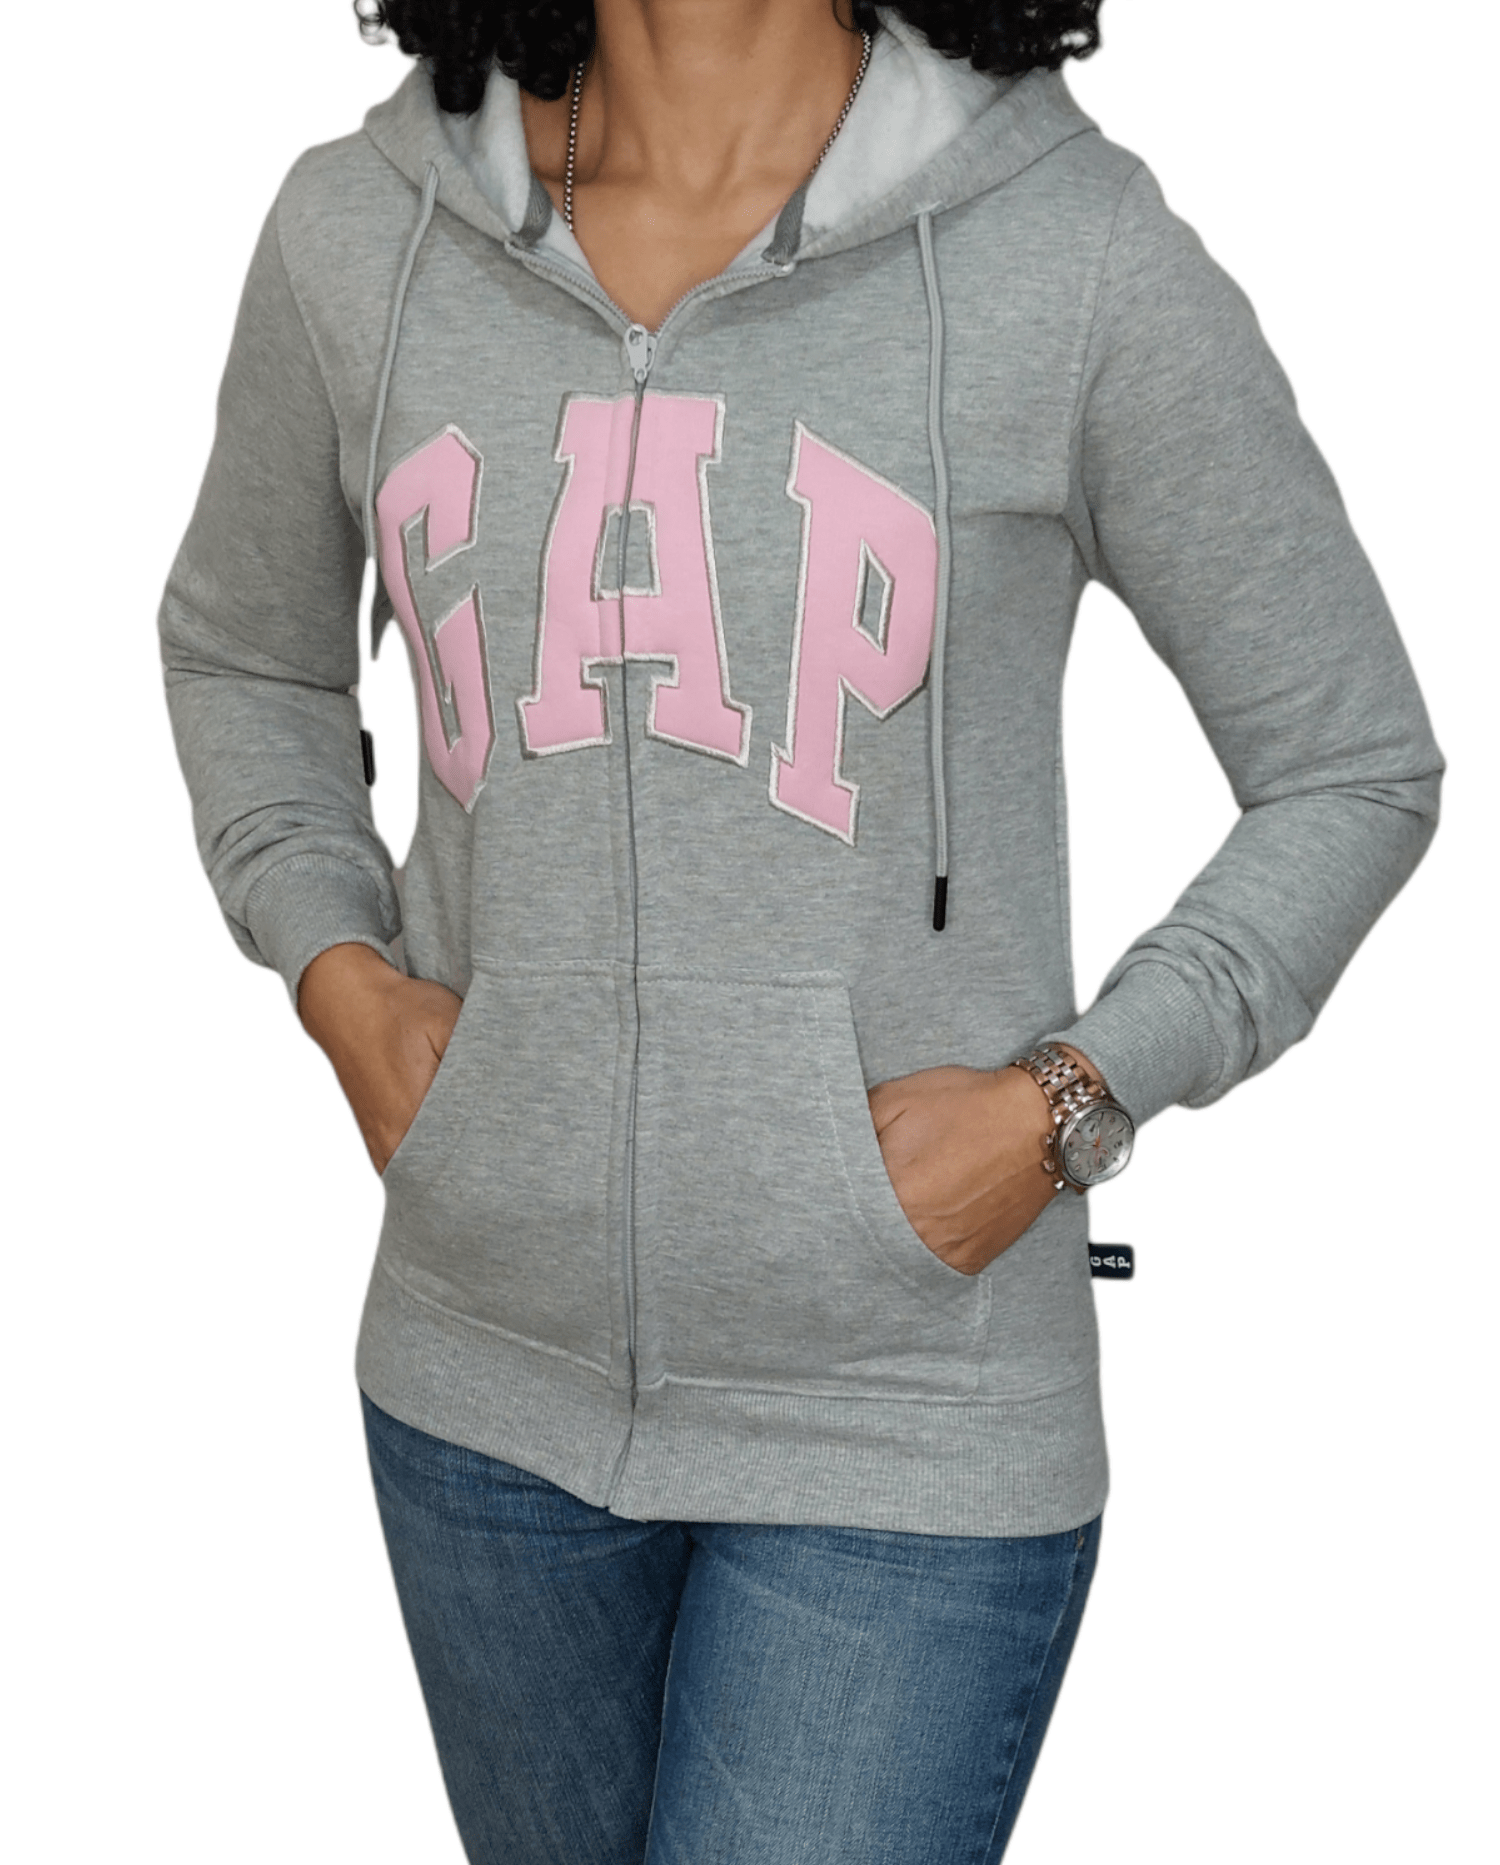 ElOutlet Women Sportsn Hoodie Jacket Women Zip-Through with Hoodie - Grey